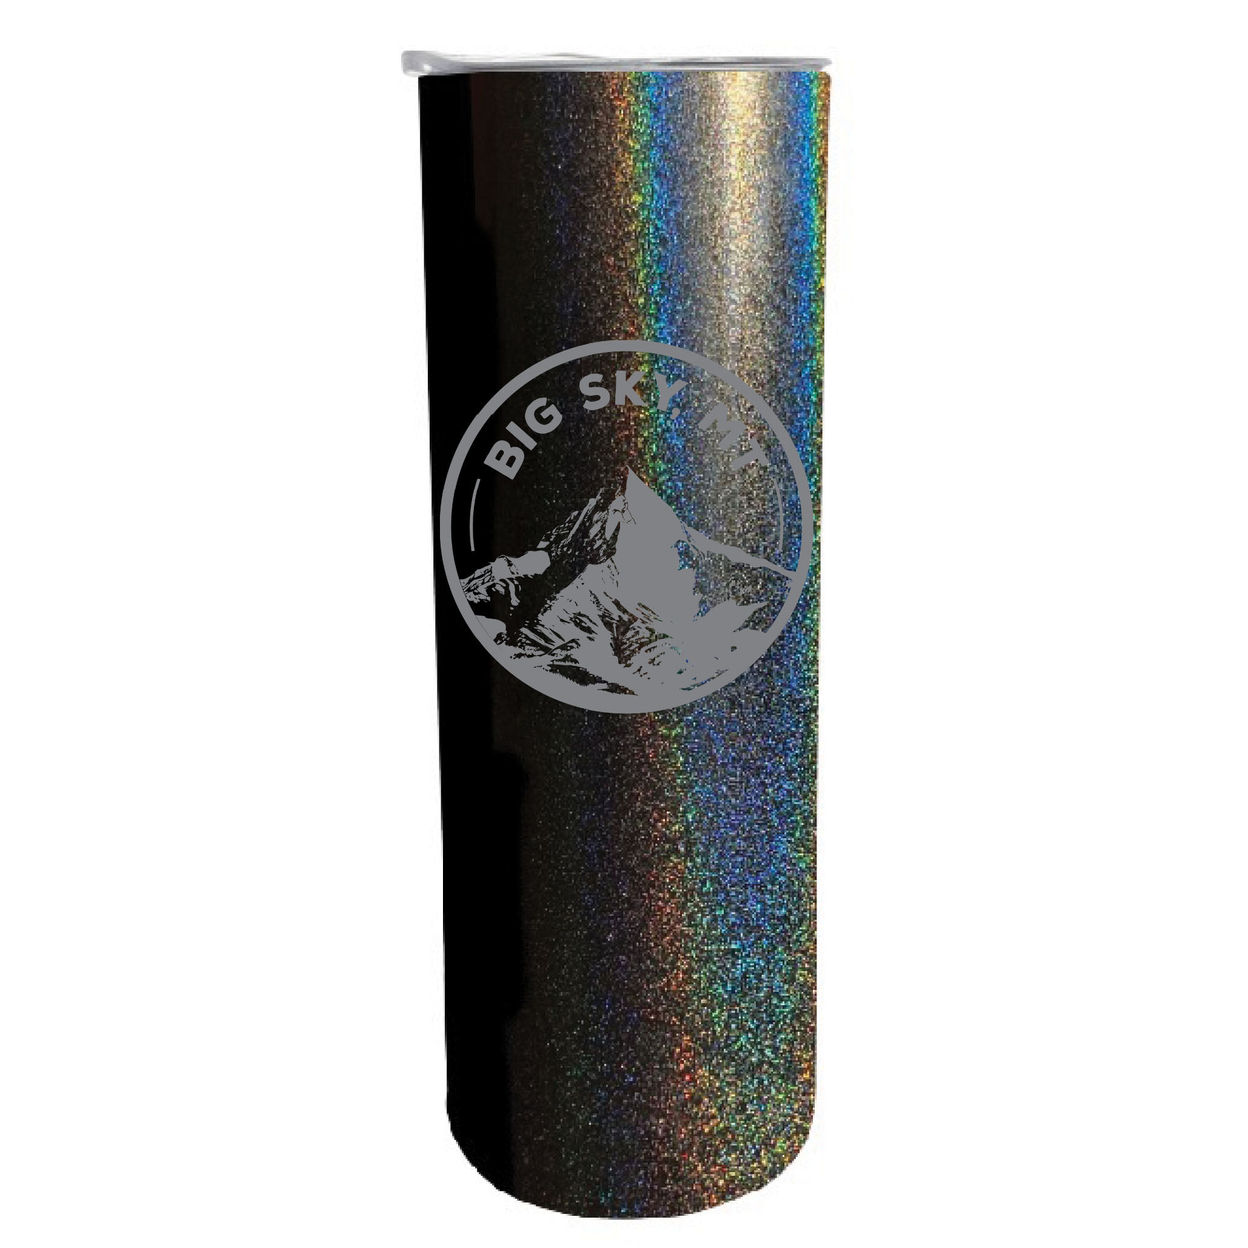 Big Sky Montana Souvenir 20 Oz Engraved Insulated Stainless Steel Skinny Tumbler - Black Glitter,,2-Pack